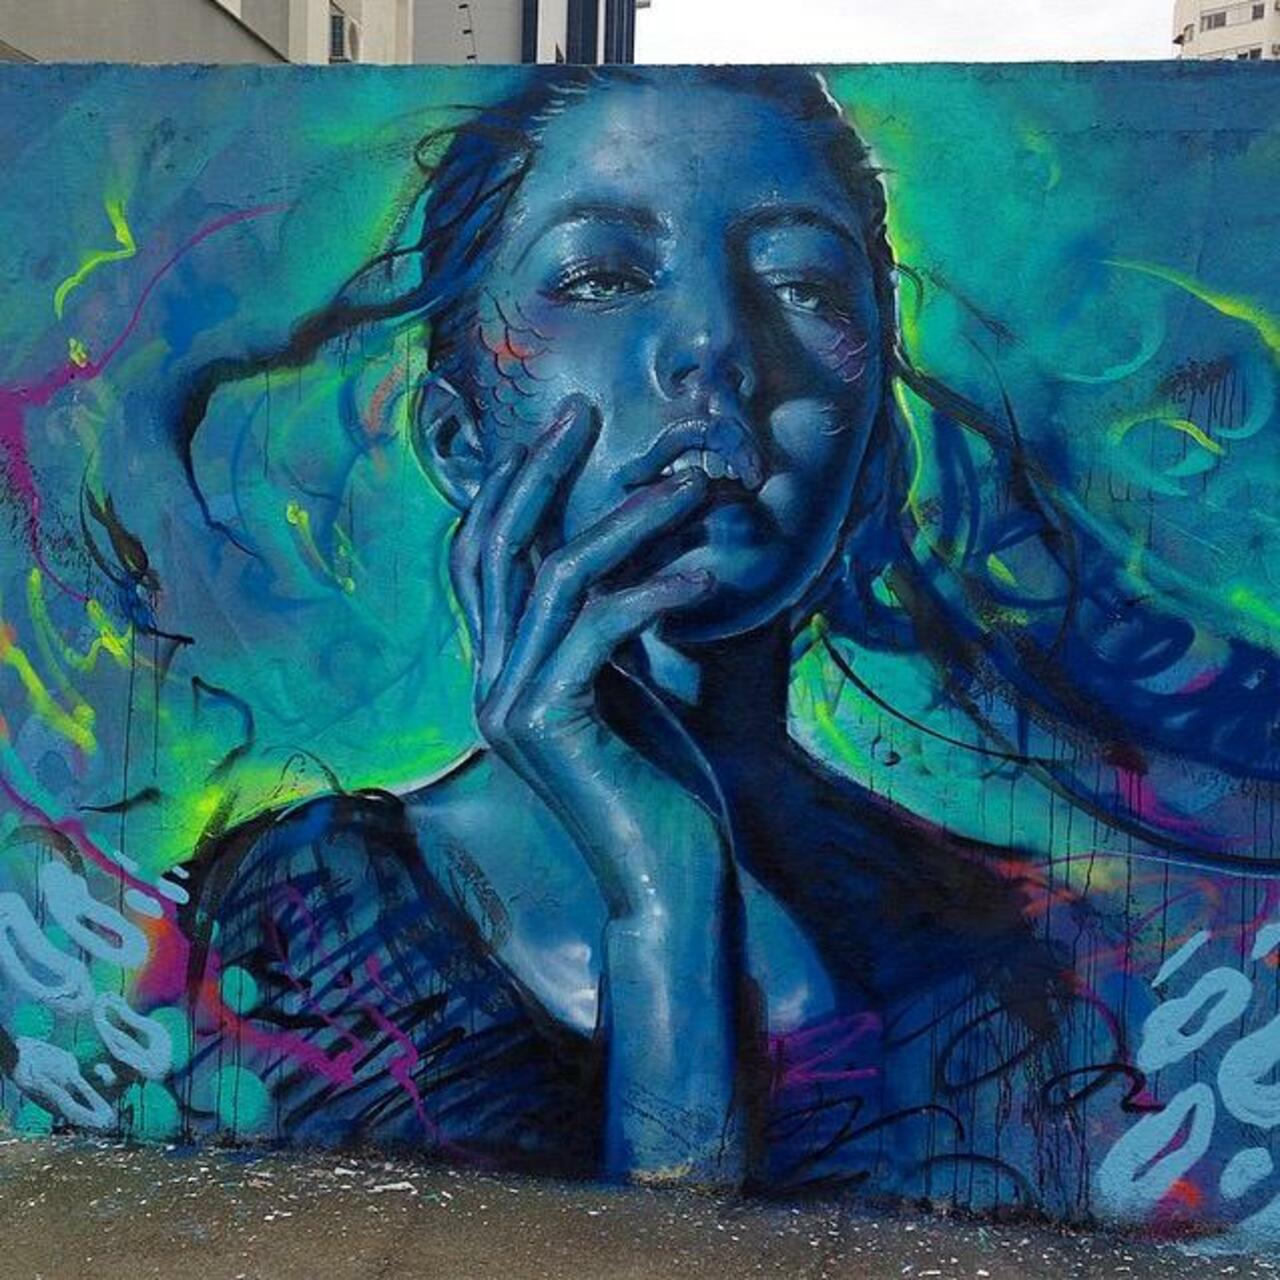 Thiago Valdi new Street Art piece titled 'Day Dreamer' #art #mural #graffiti #streetart http://t.co/3UodbQm48I …… http://twitter.com/GoogleStreetArt/status/652604458048876544/photo/1/large?utm_source=fb&utm_medium=fb&utm_campaign=charlesjackso14&utm_content=652732463609958400